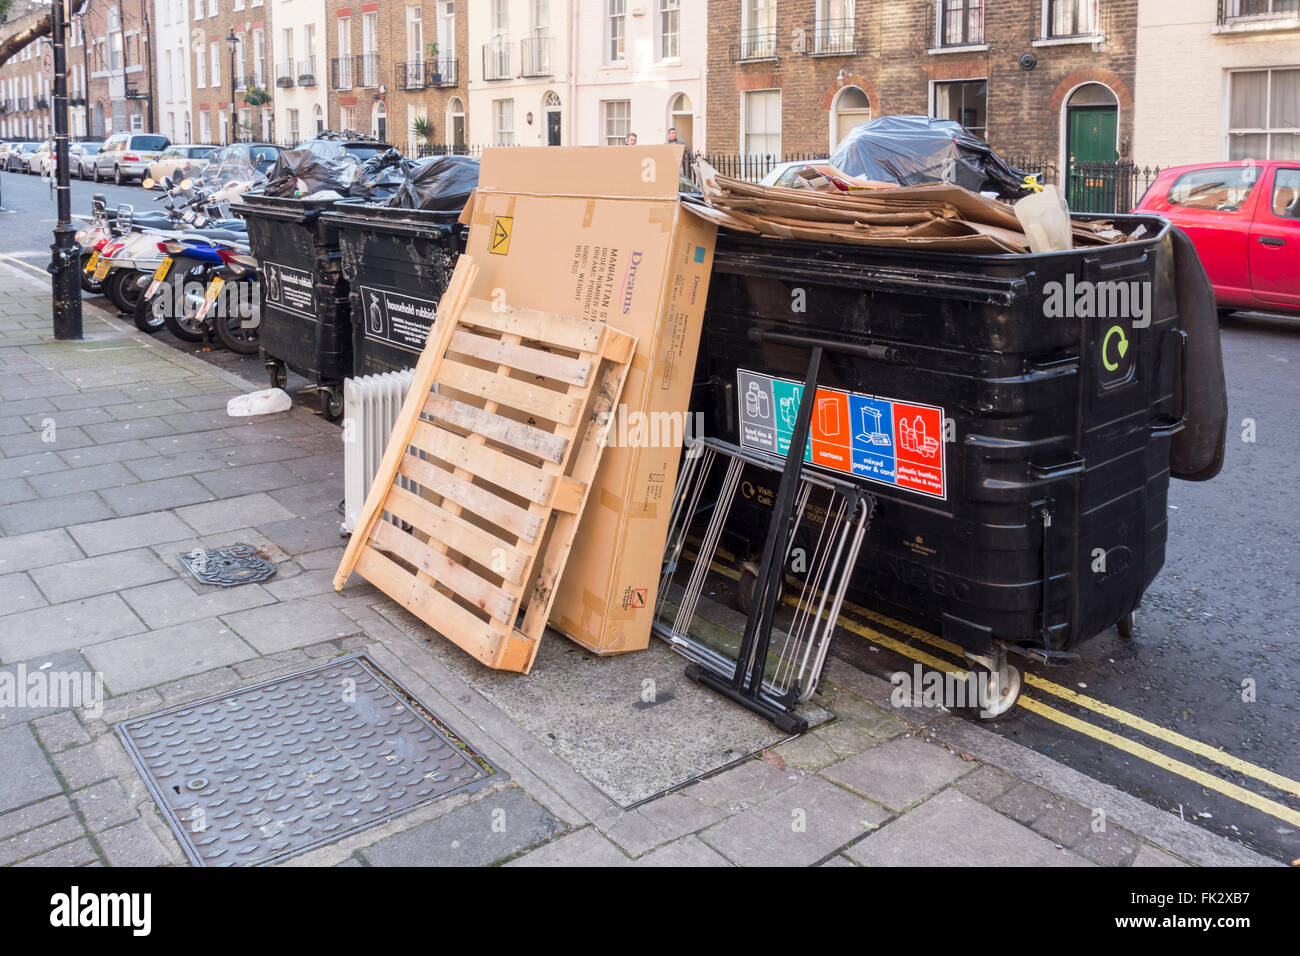 Bins on London street Stock Photo